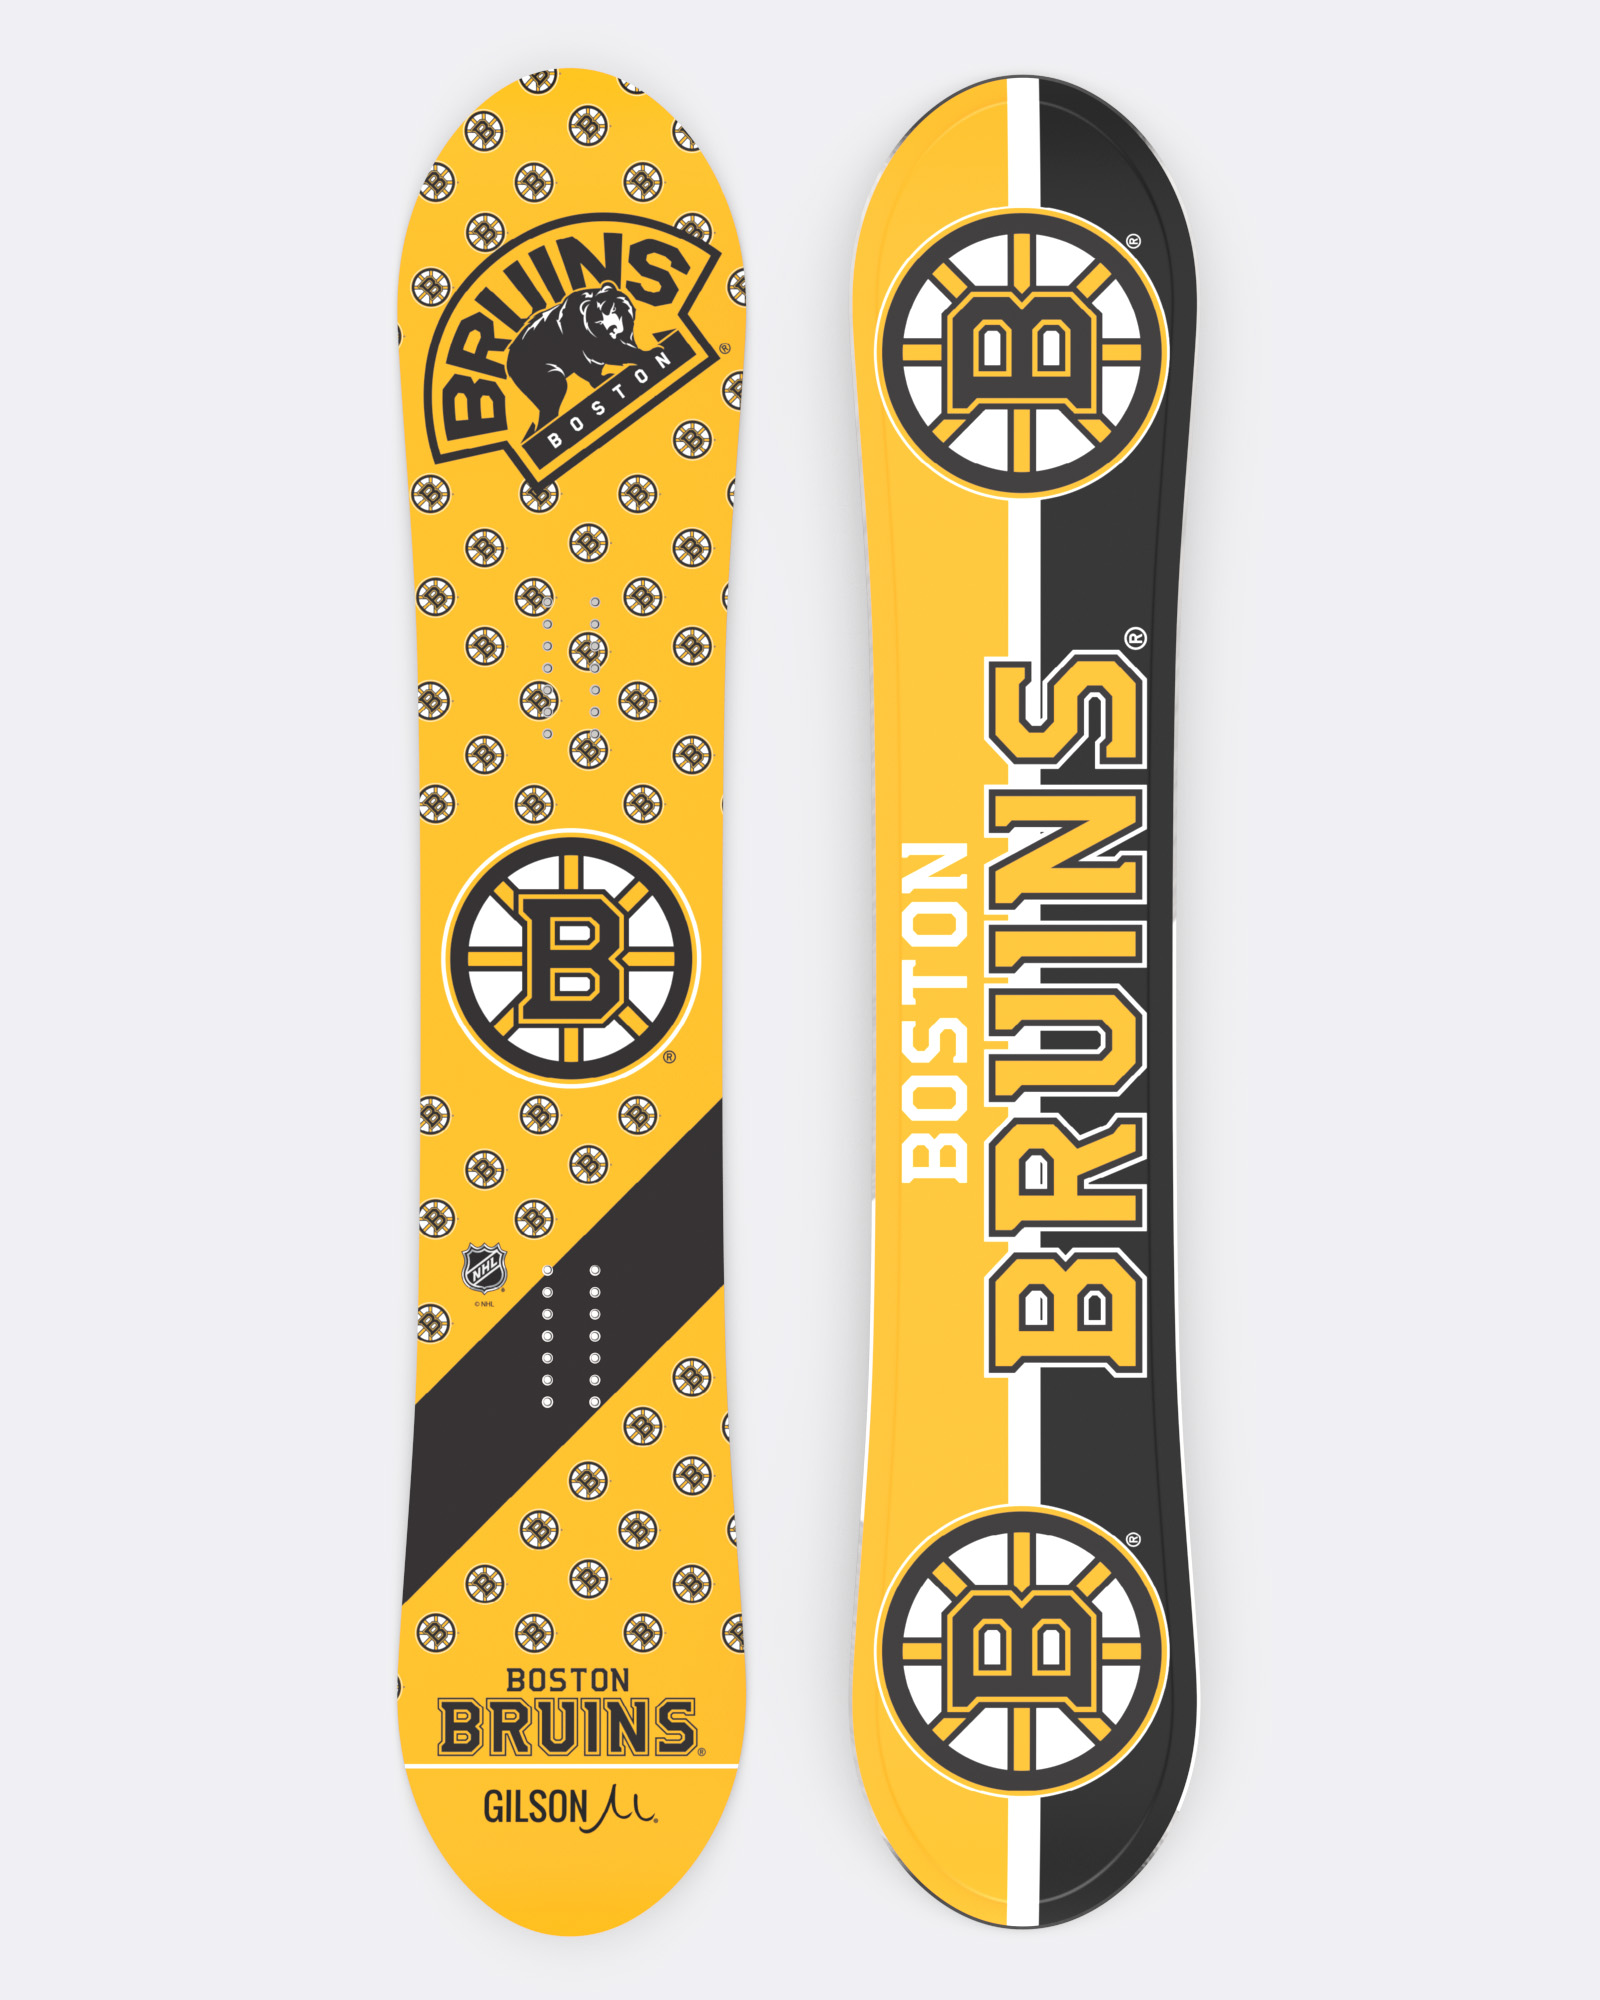 Boston Bruins graphics